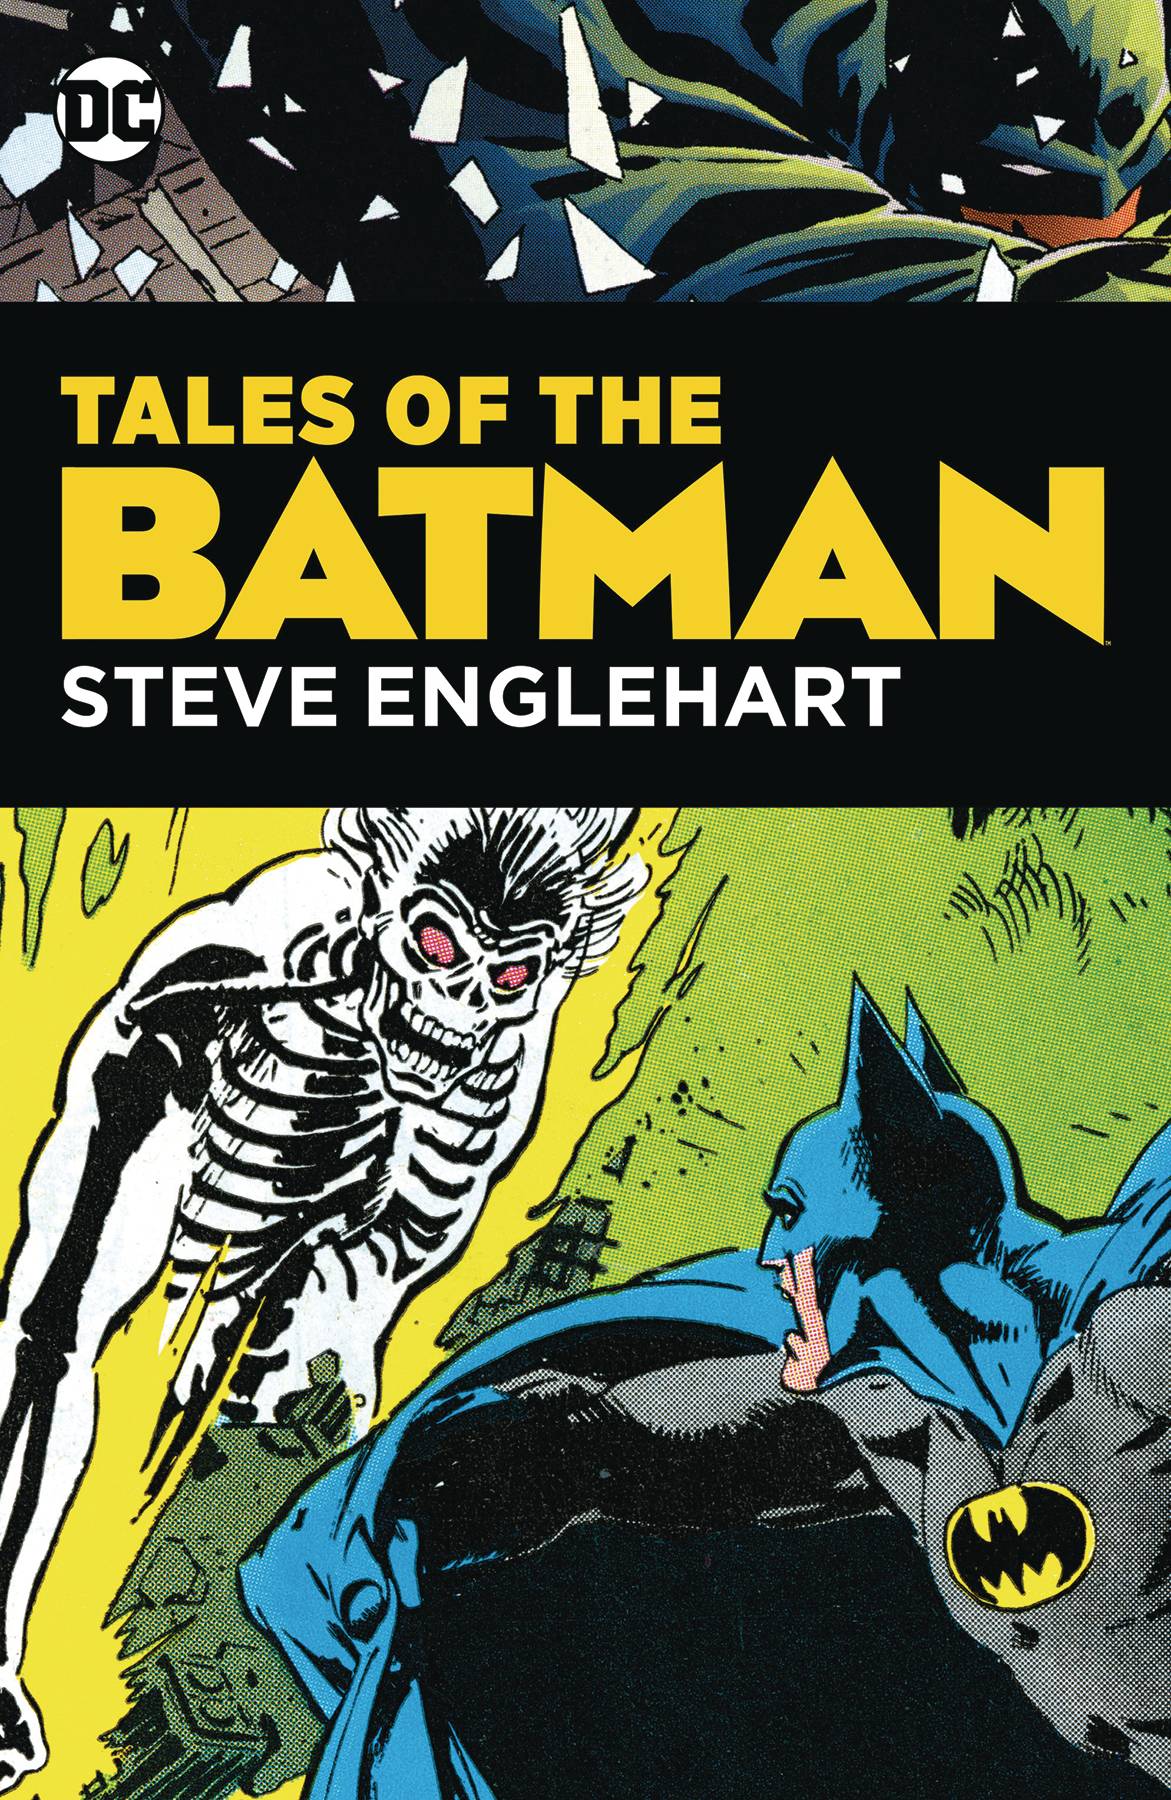 TALES OF THE BATMAN STEVE ENGLEHART HC